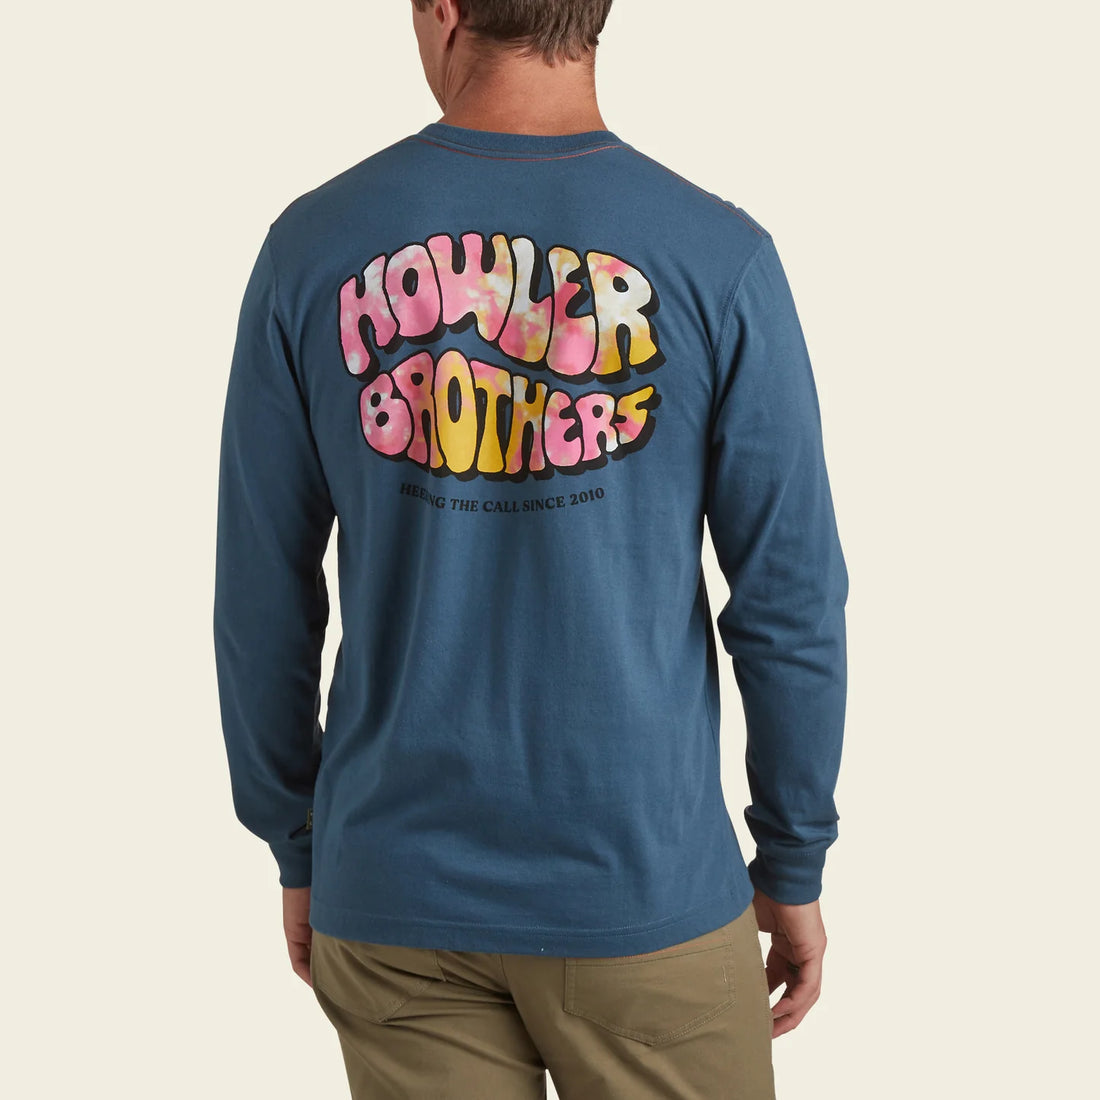 Howler Brothers Bubble Gum Longsleeve T-Shirt